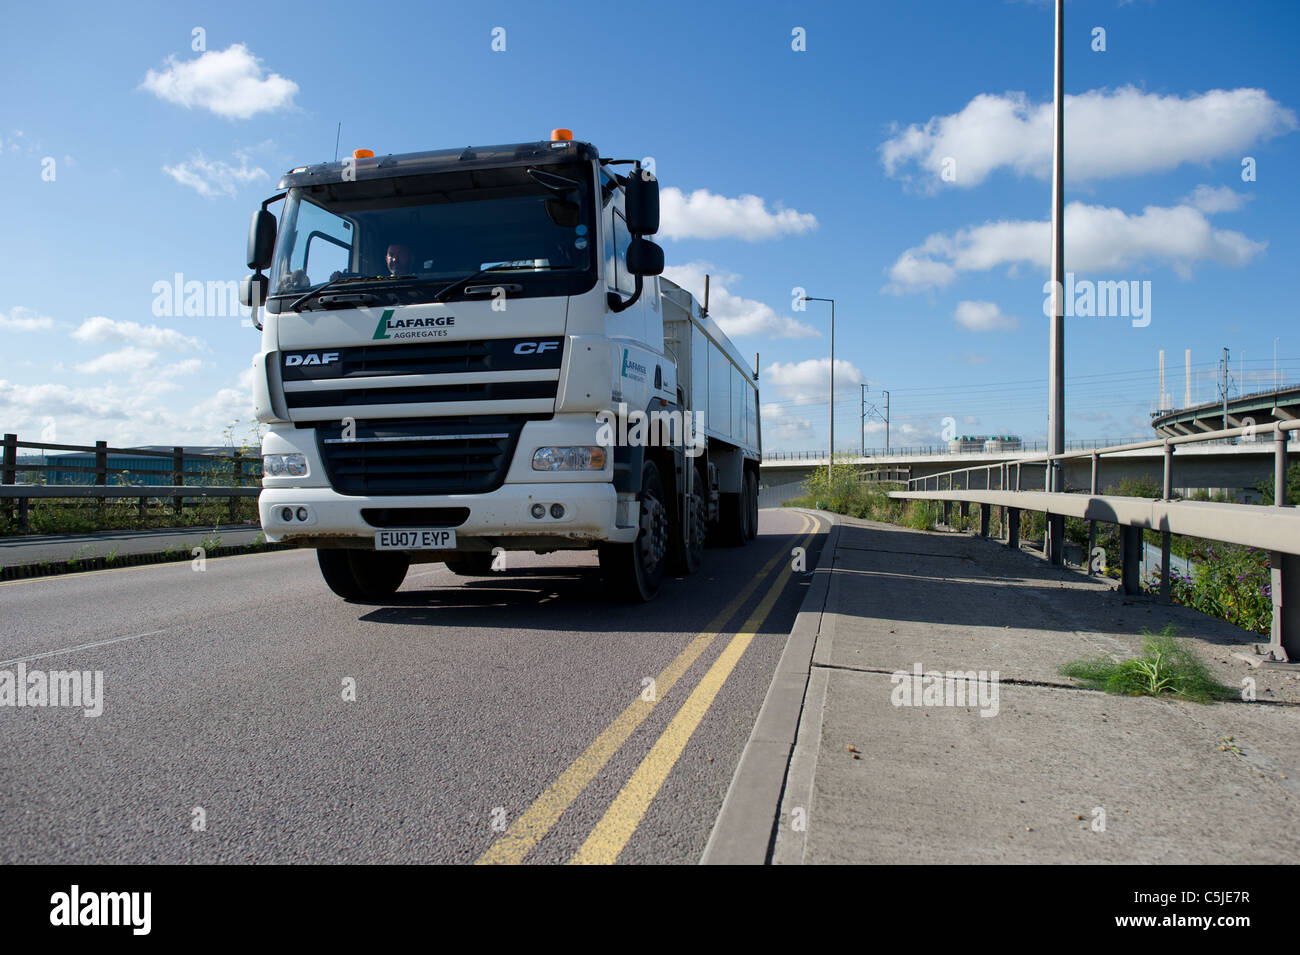 Rigid tipper lorry. Stock Photo